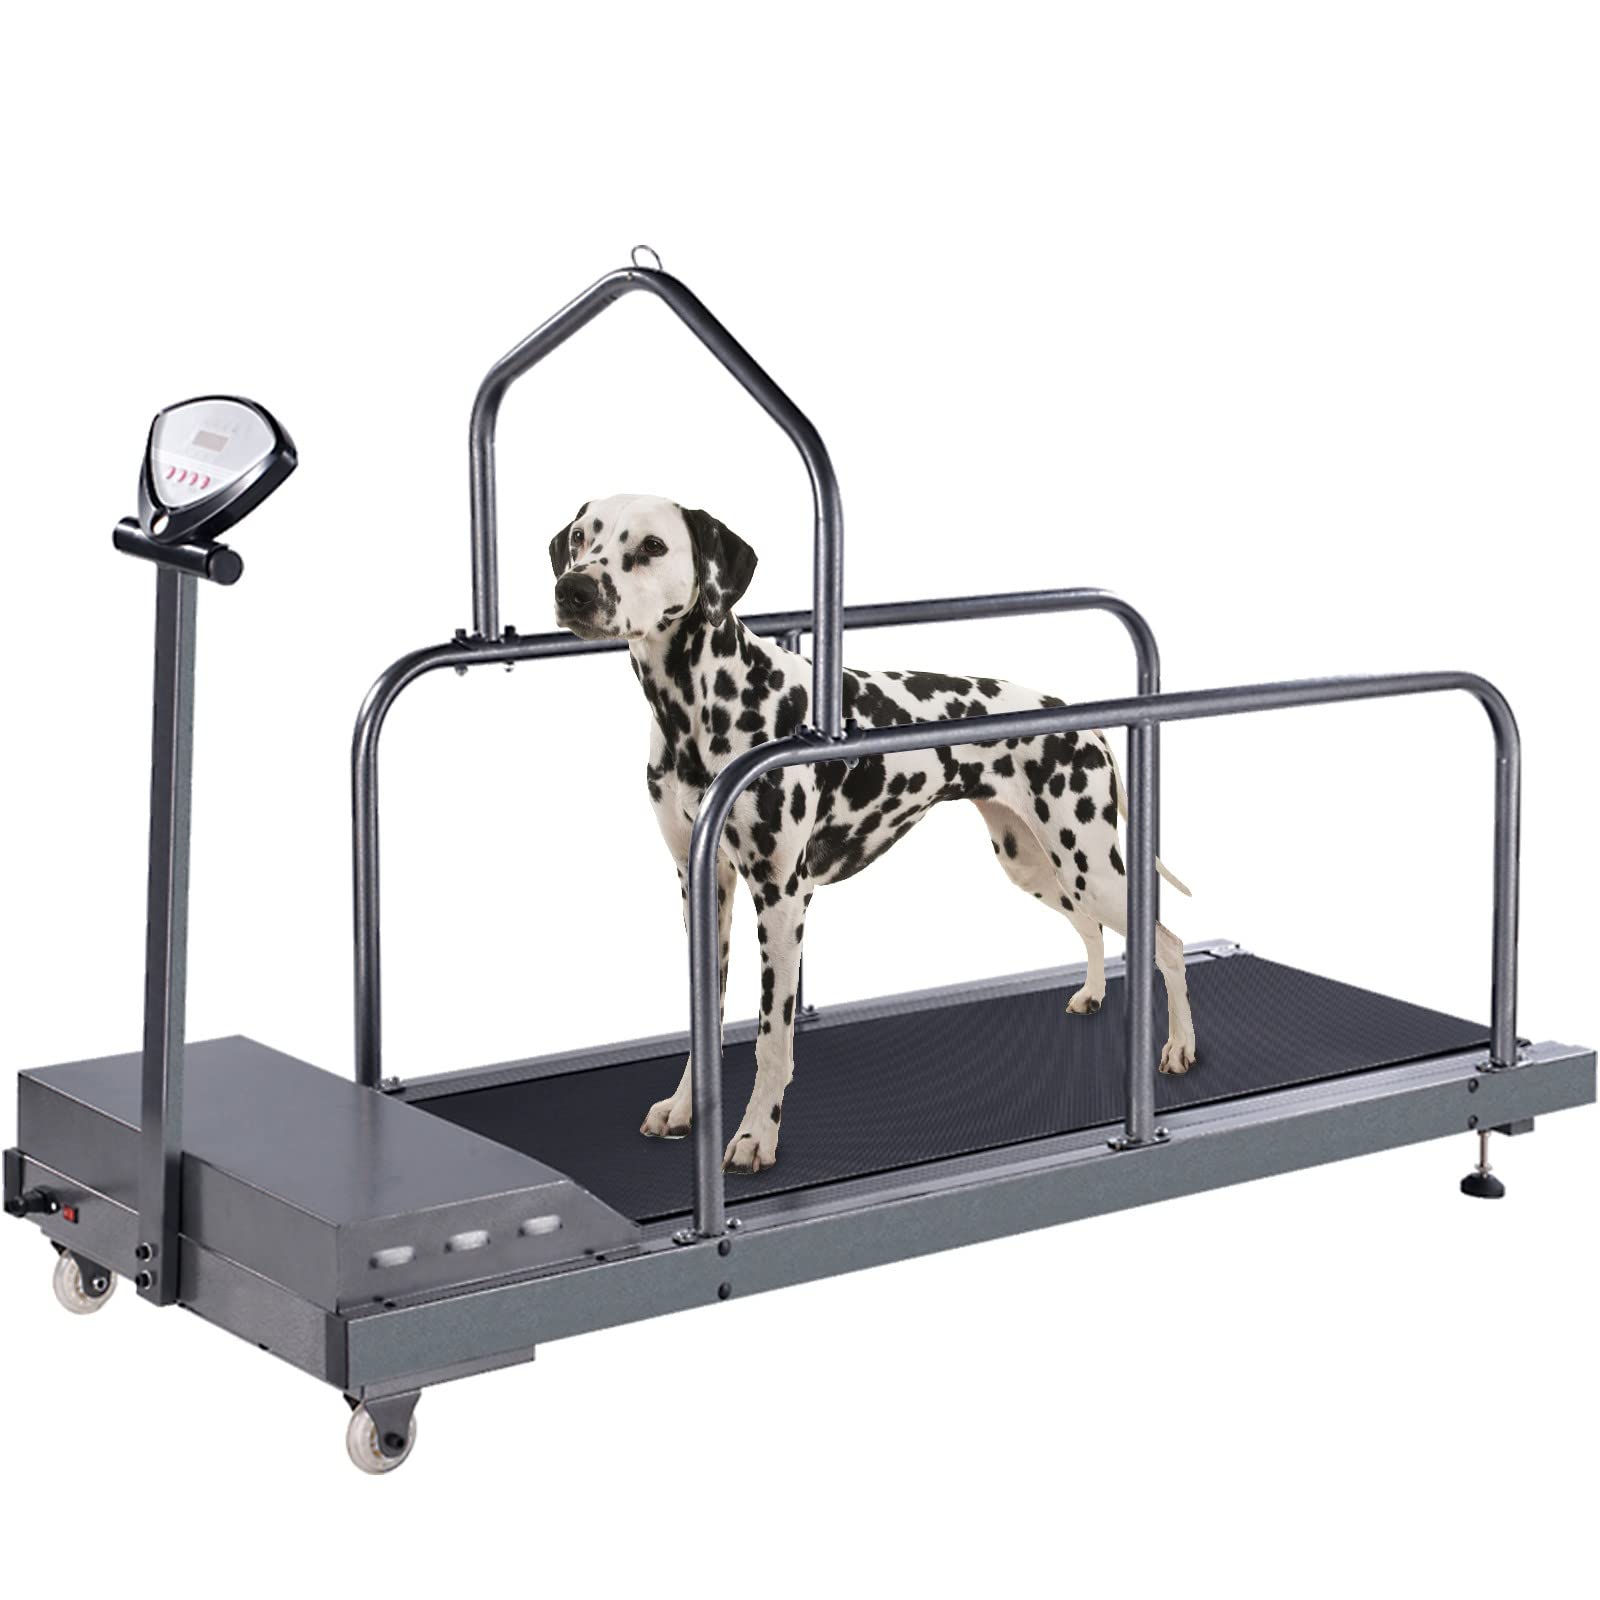 self propelled dog treadmill canada